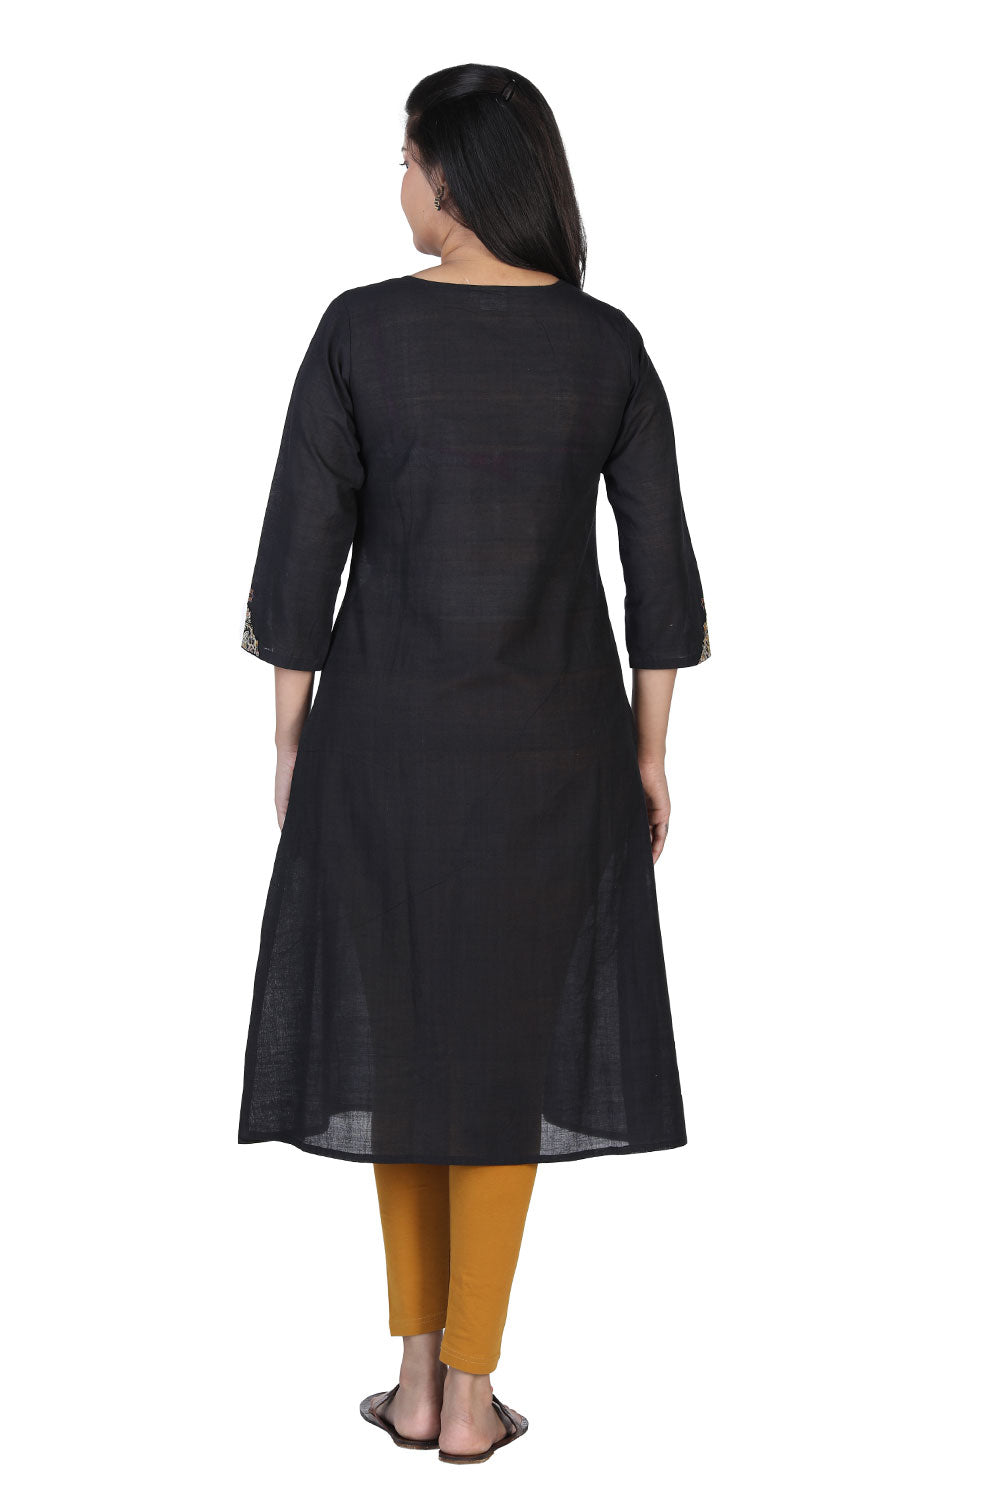 Black mangalgiri cotton kurti with kalamkari print and ethnic thread embroidery.